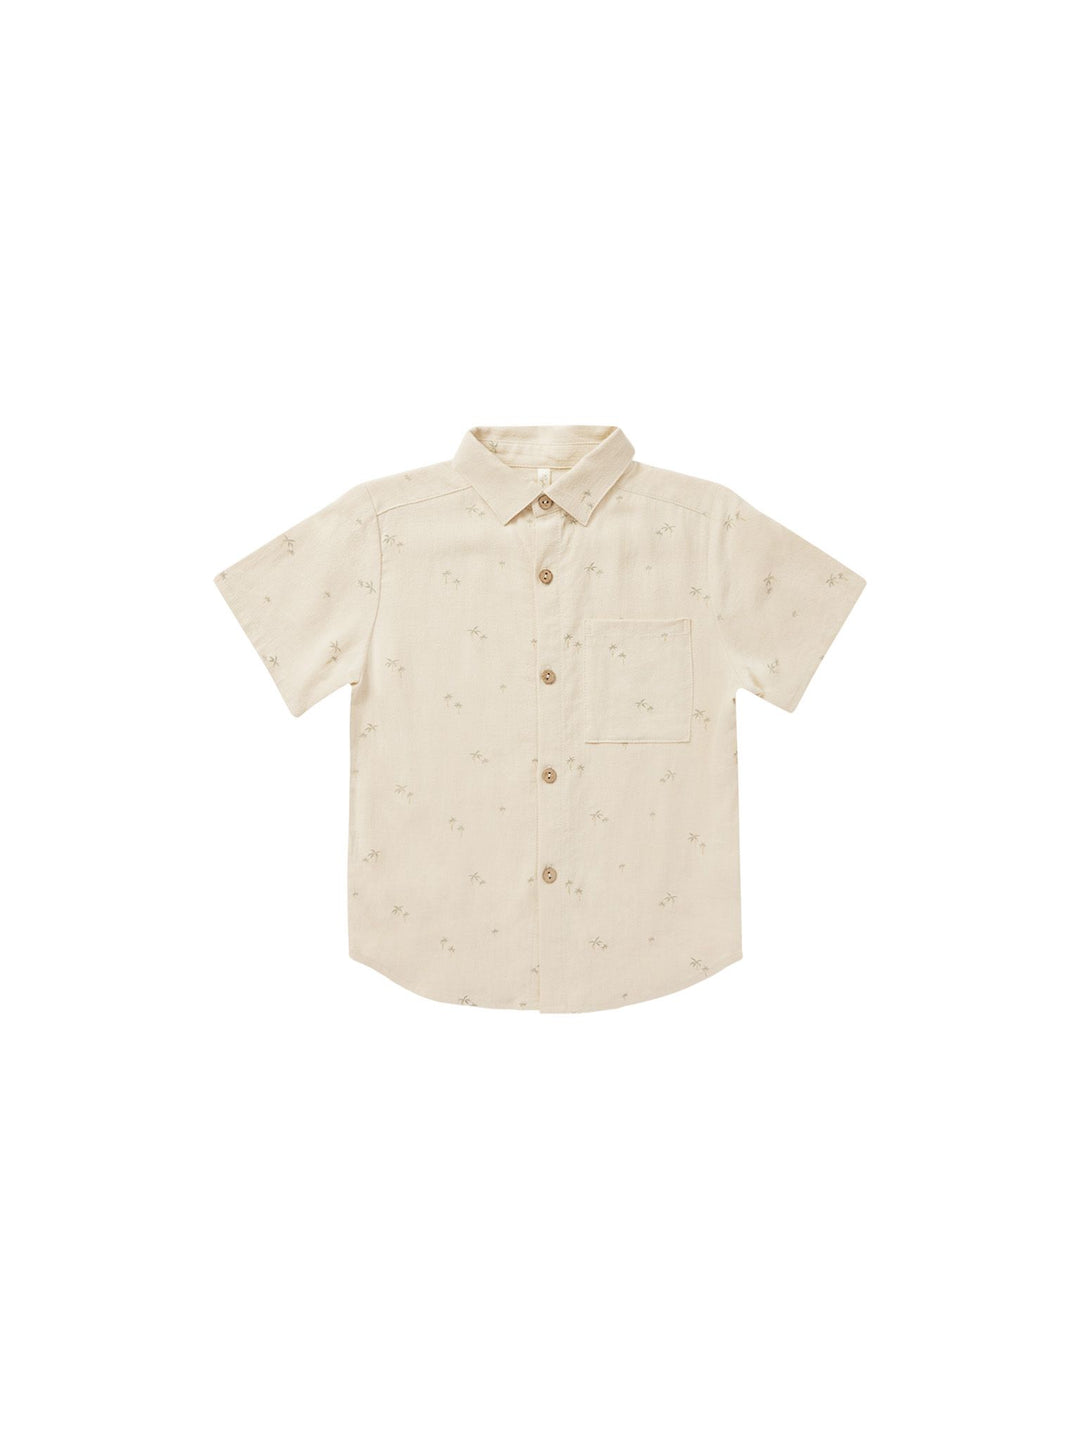 Rylee + Cru Collared Short Sleeve Shirt - Palm